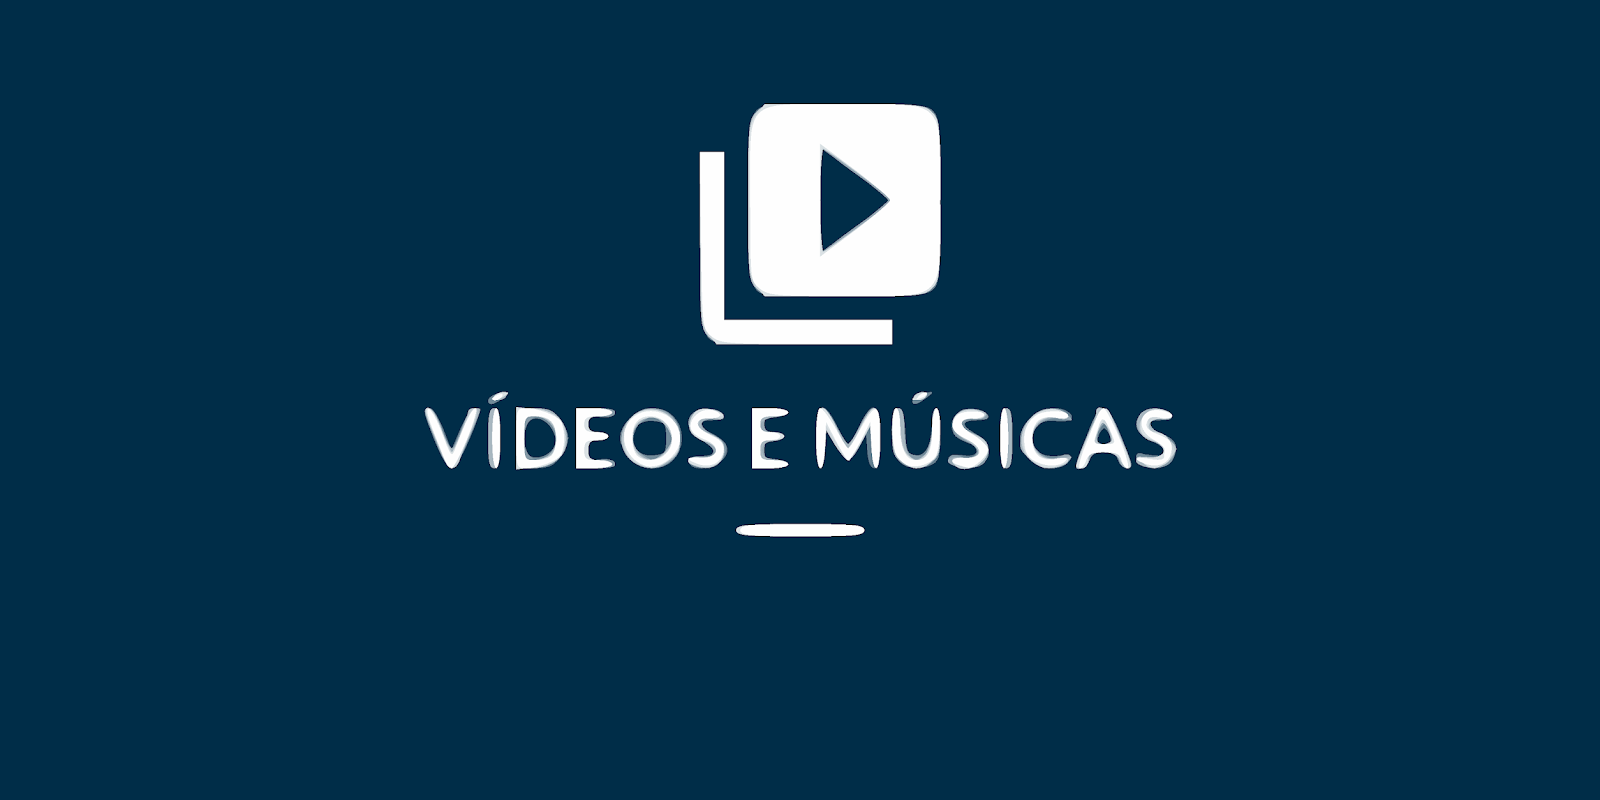 Exemplos de Vídeos e Músicas